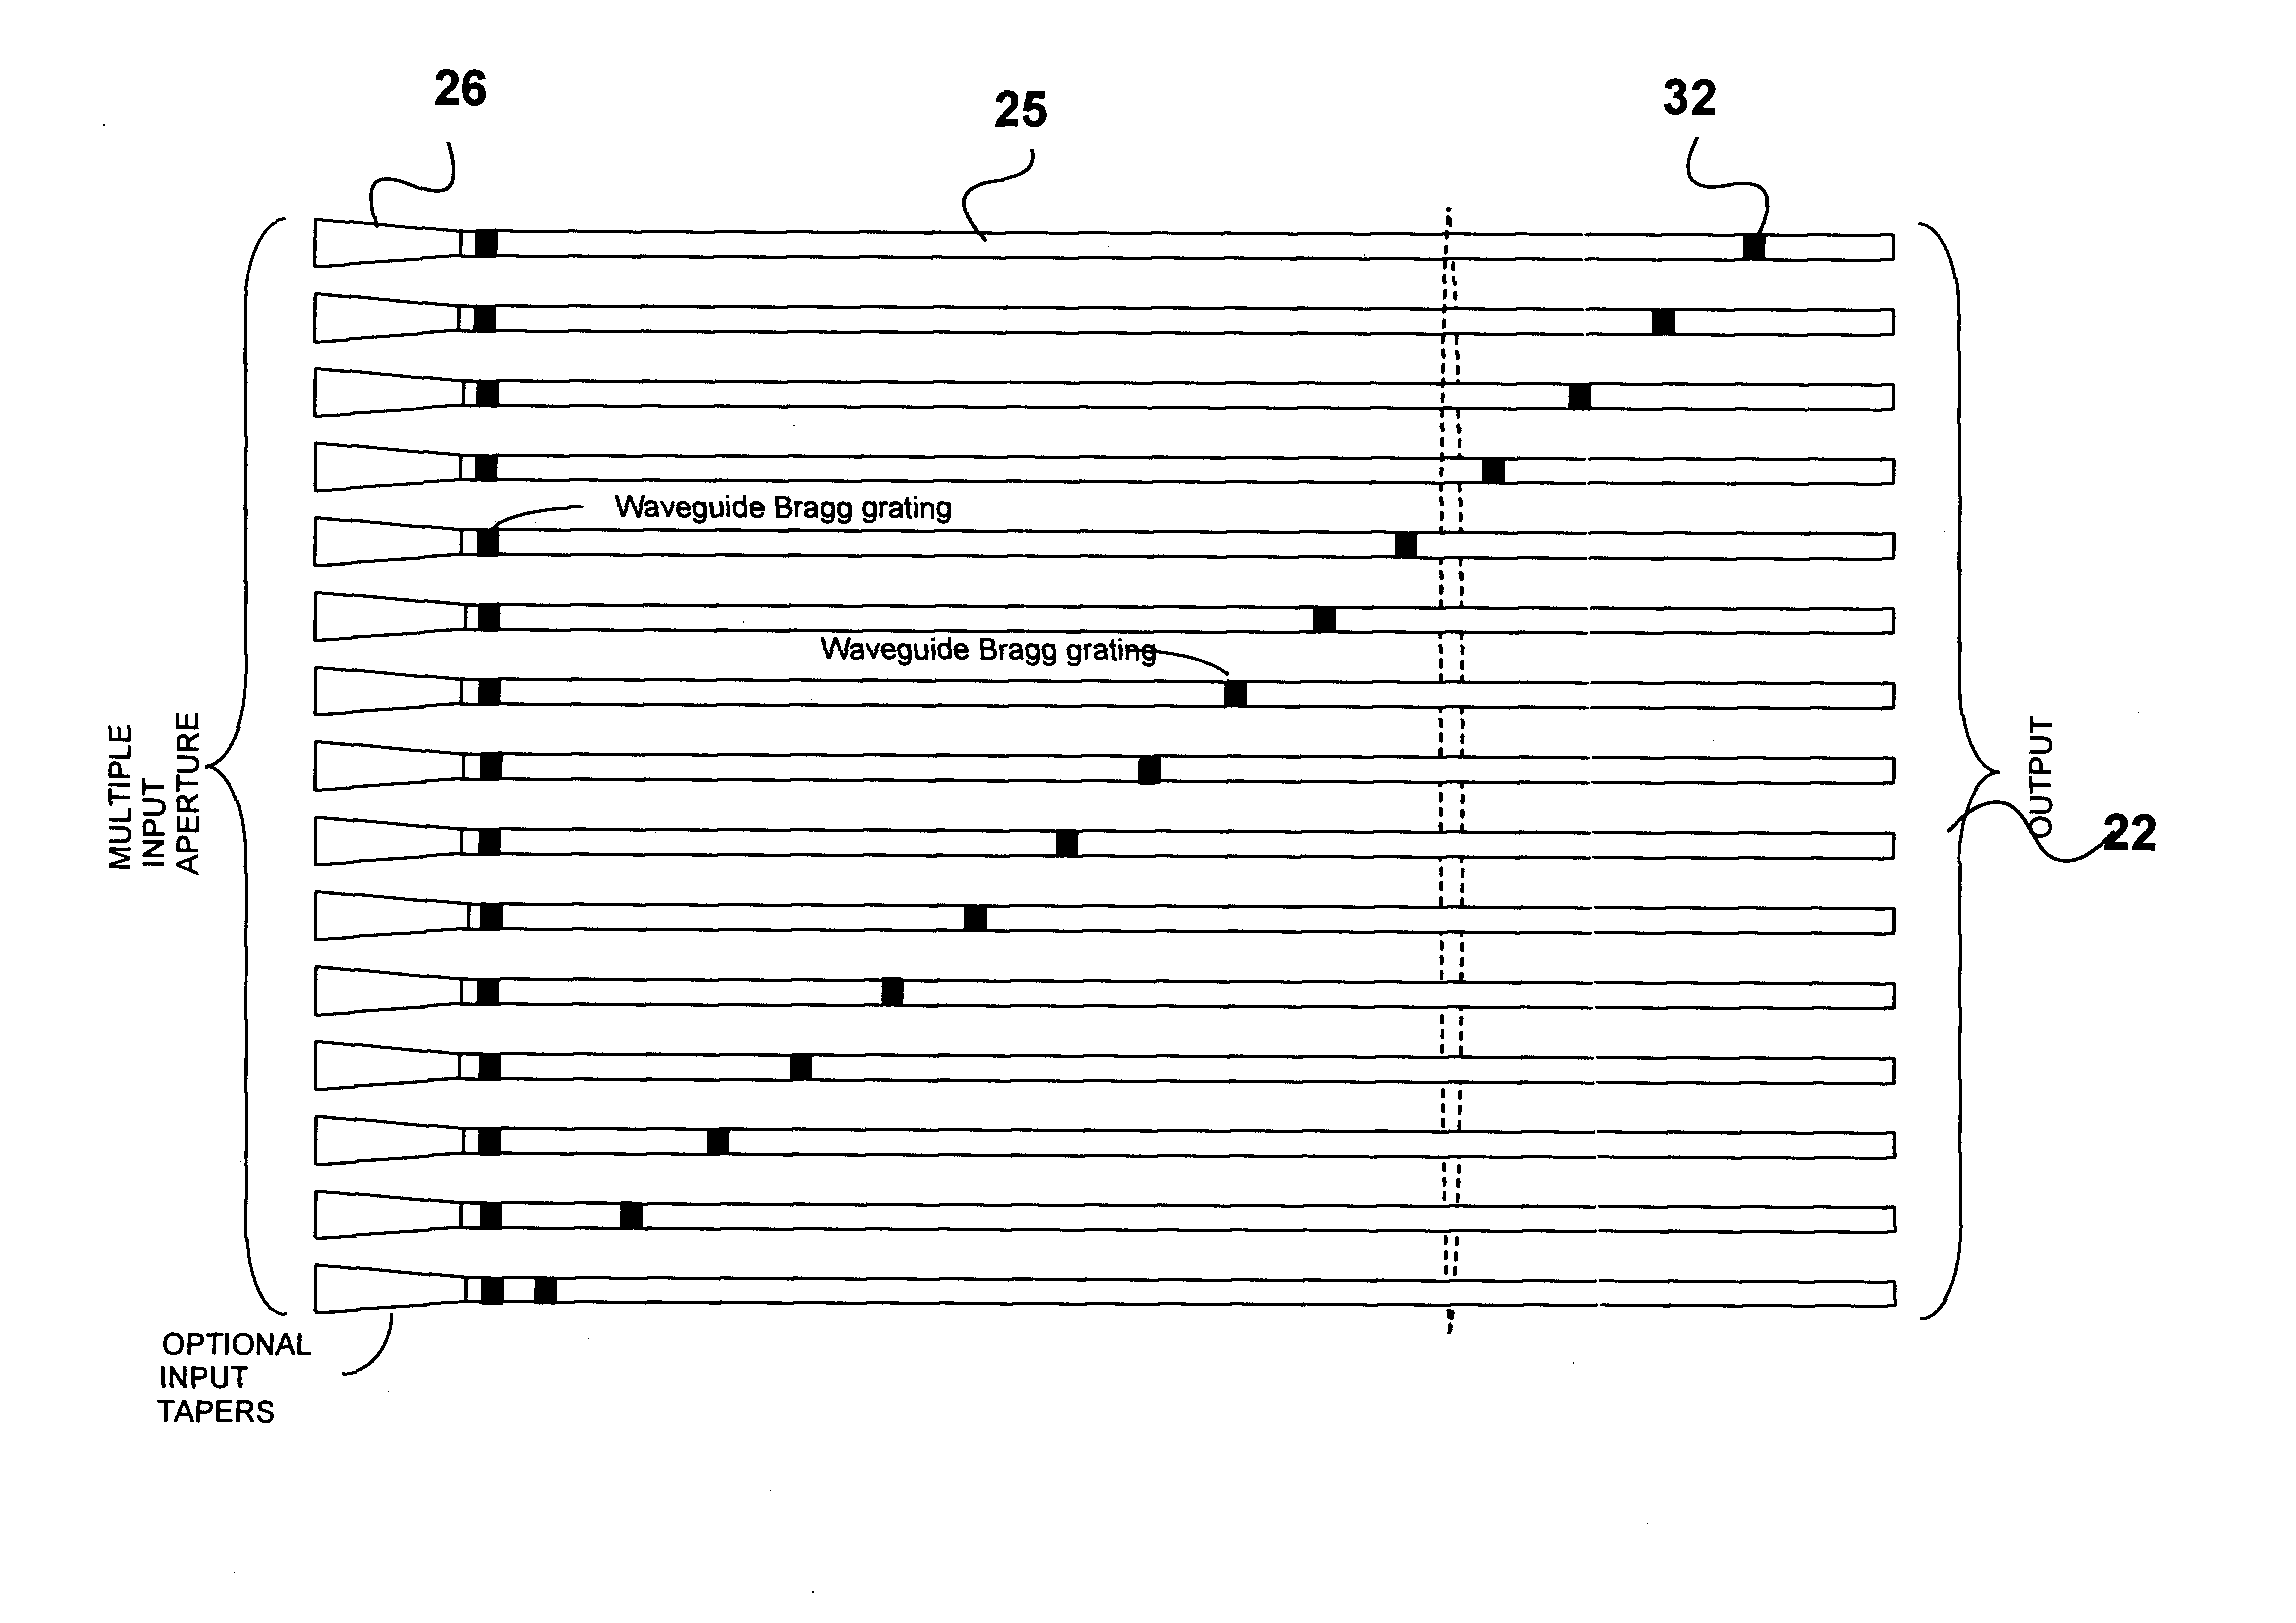 Planar waveguide wavelength dispersive devices with multiple waveguide input aperture